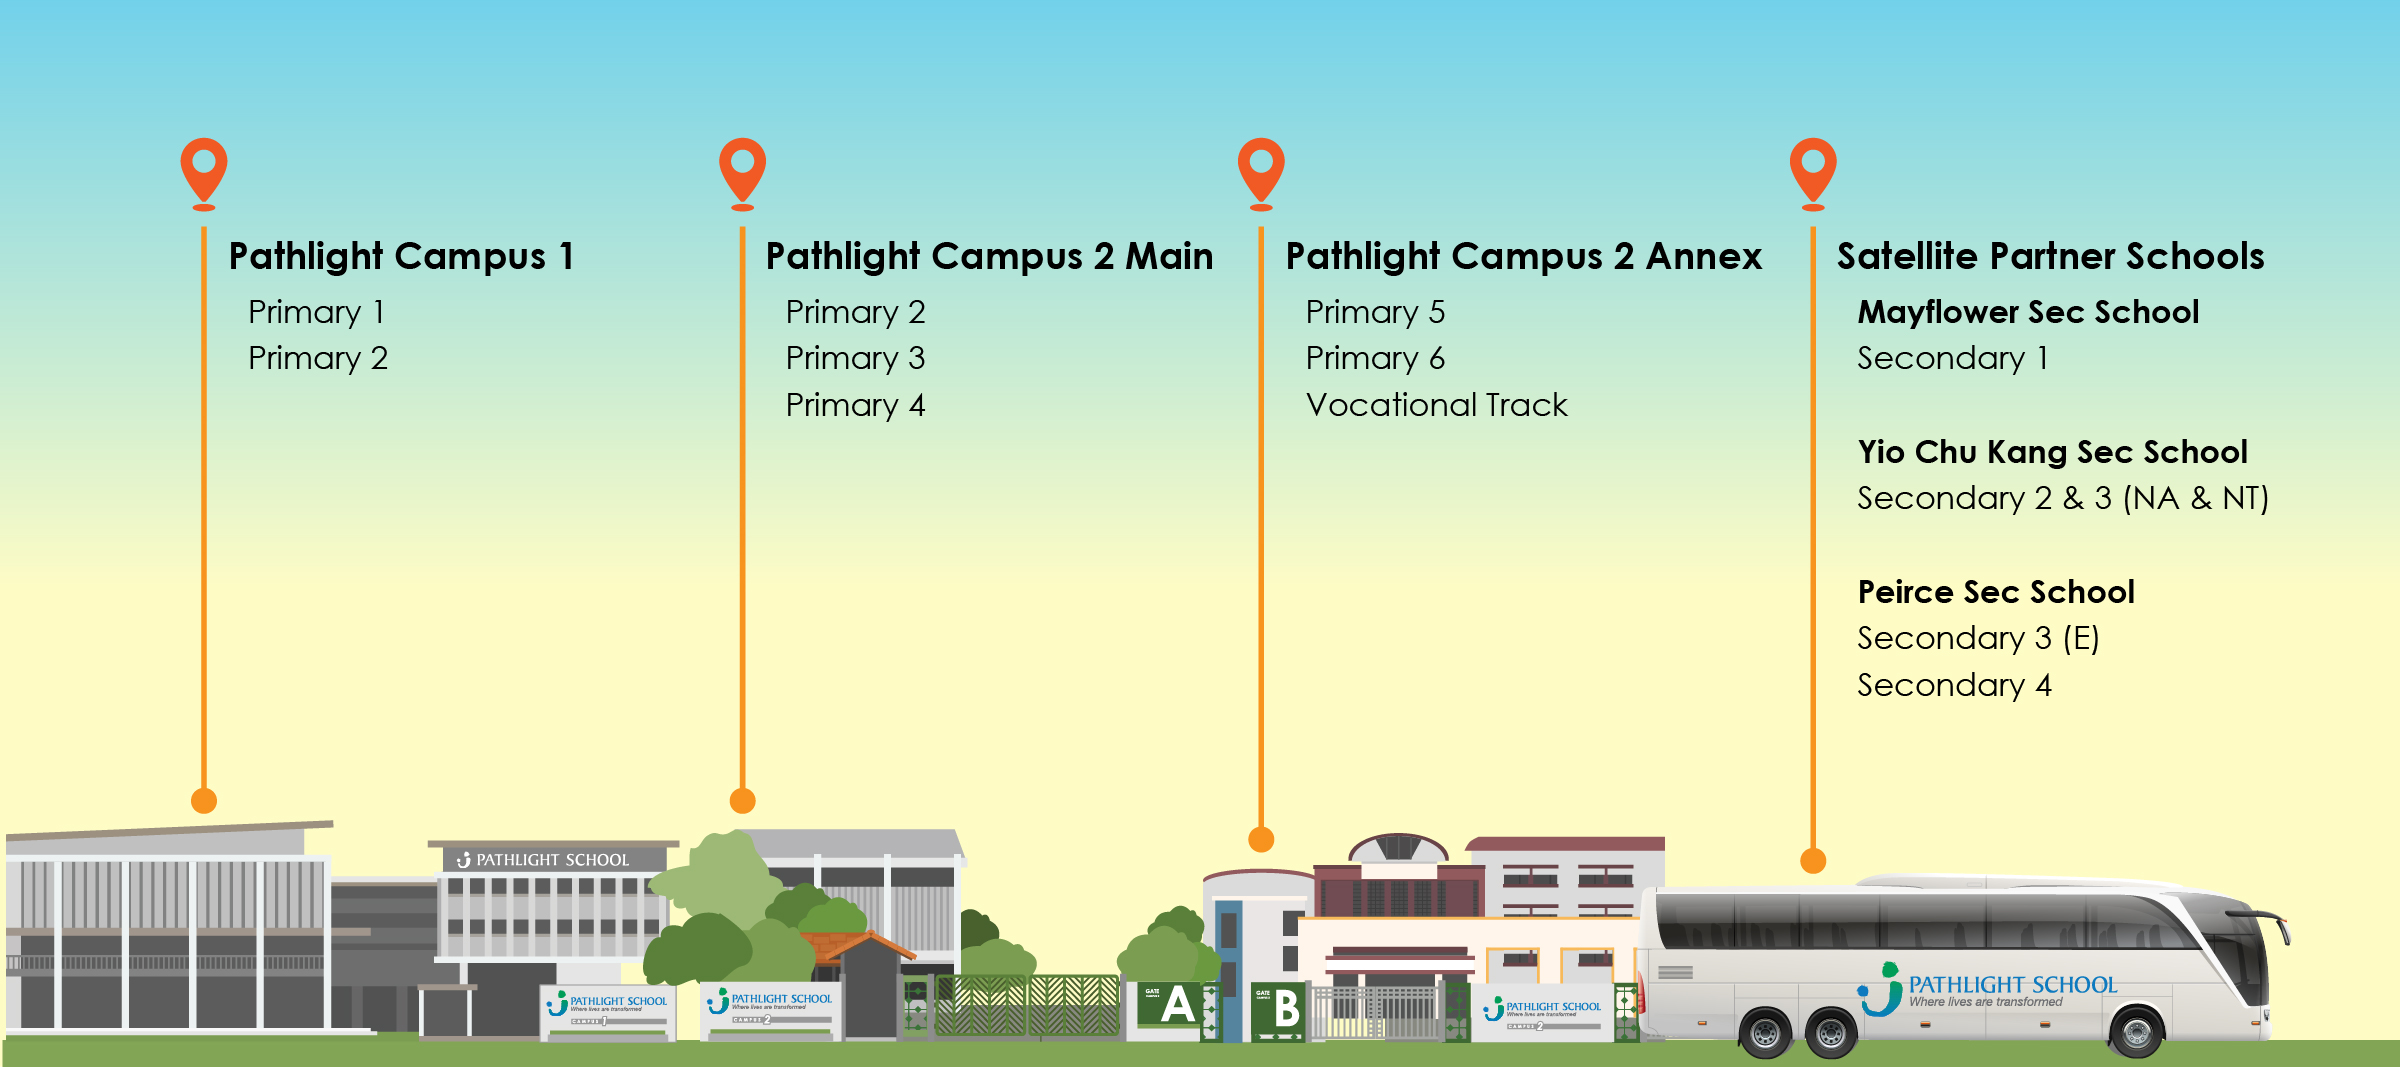 Pathlight Campuses and Satellite Partner Schools